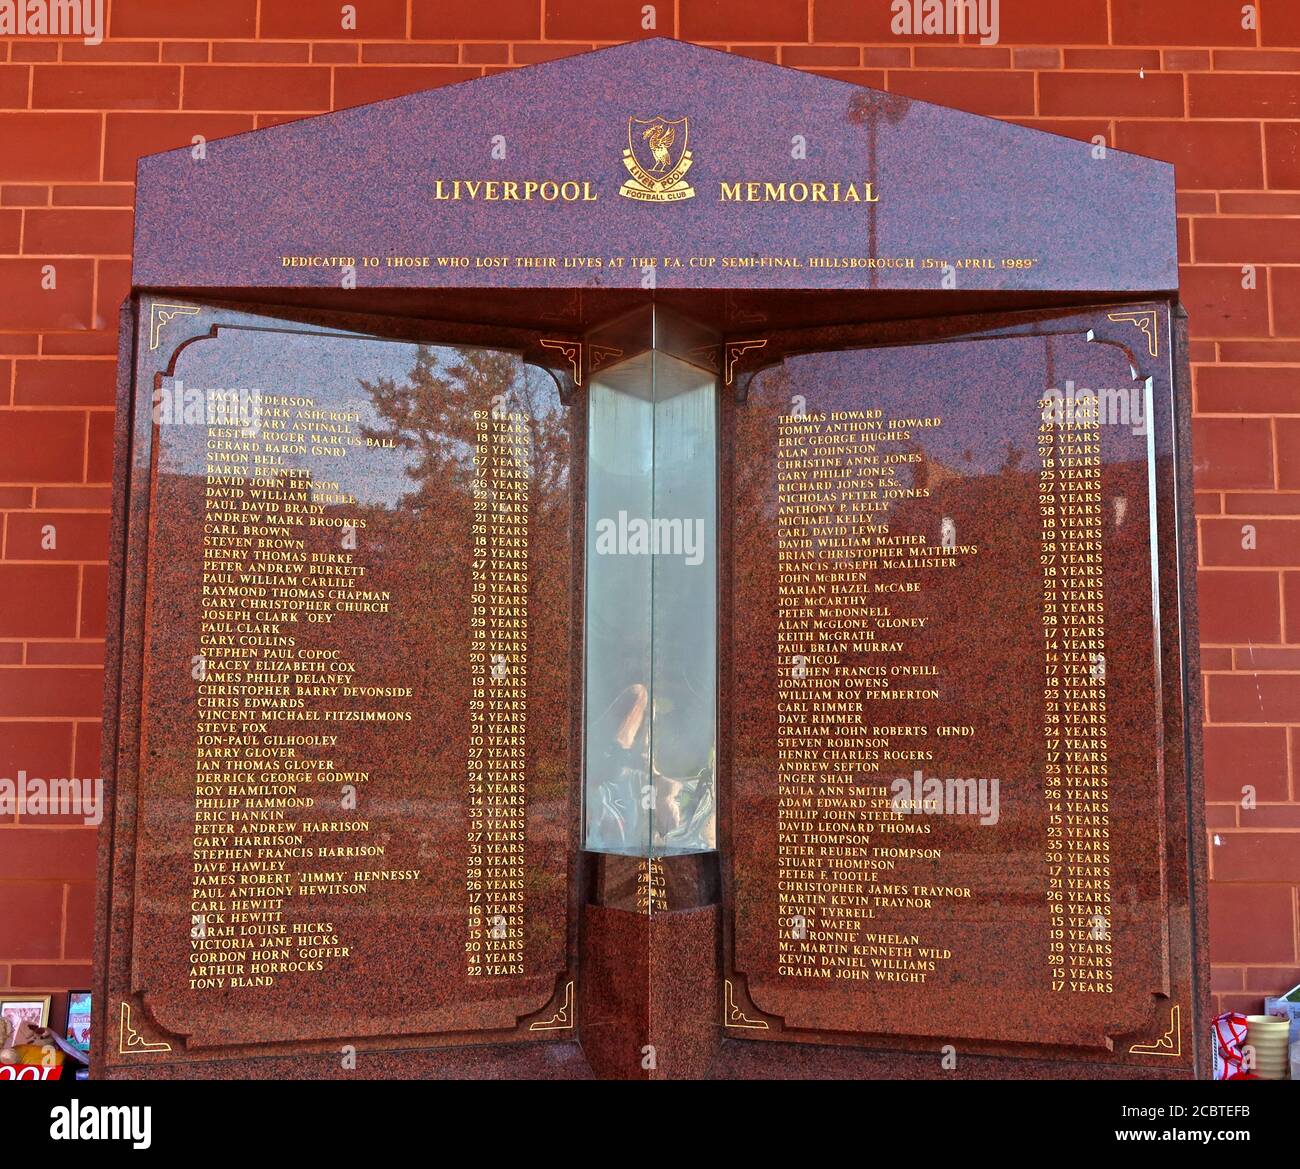 Liverpool FC Hillsborough Memorial, LFC,Liverpool Football Club, Anfield, Premier League, Merseyside,North West England, UK, L4 2UZ Stock Photo